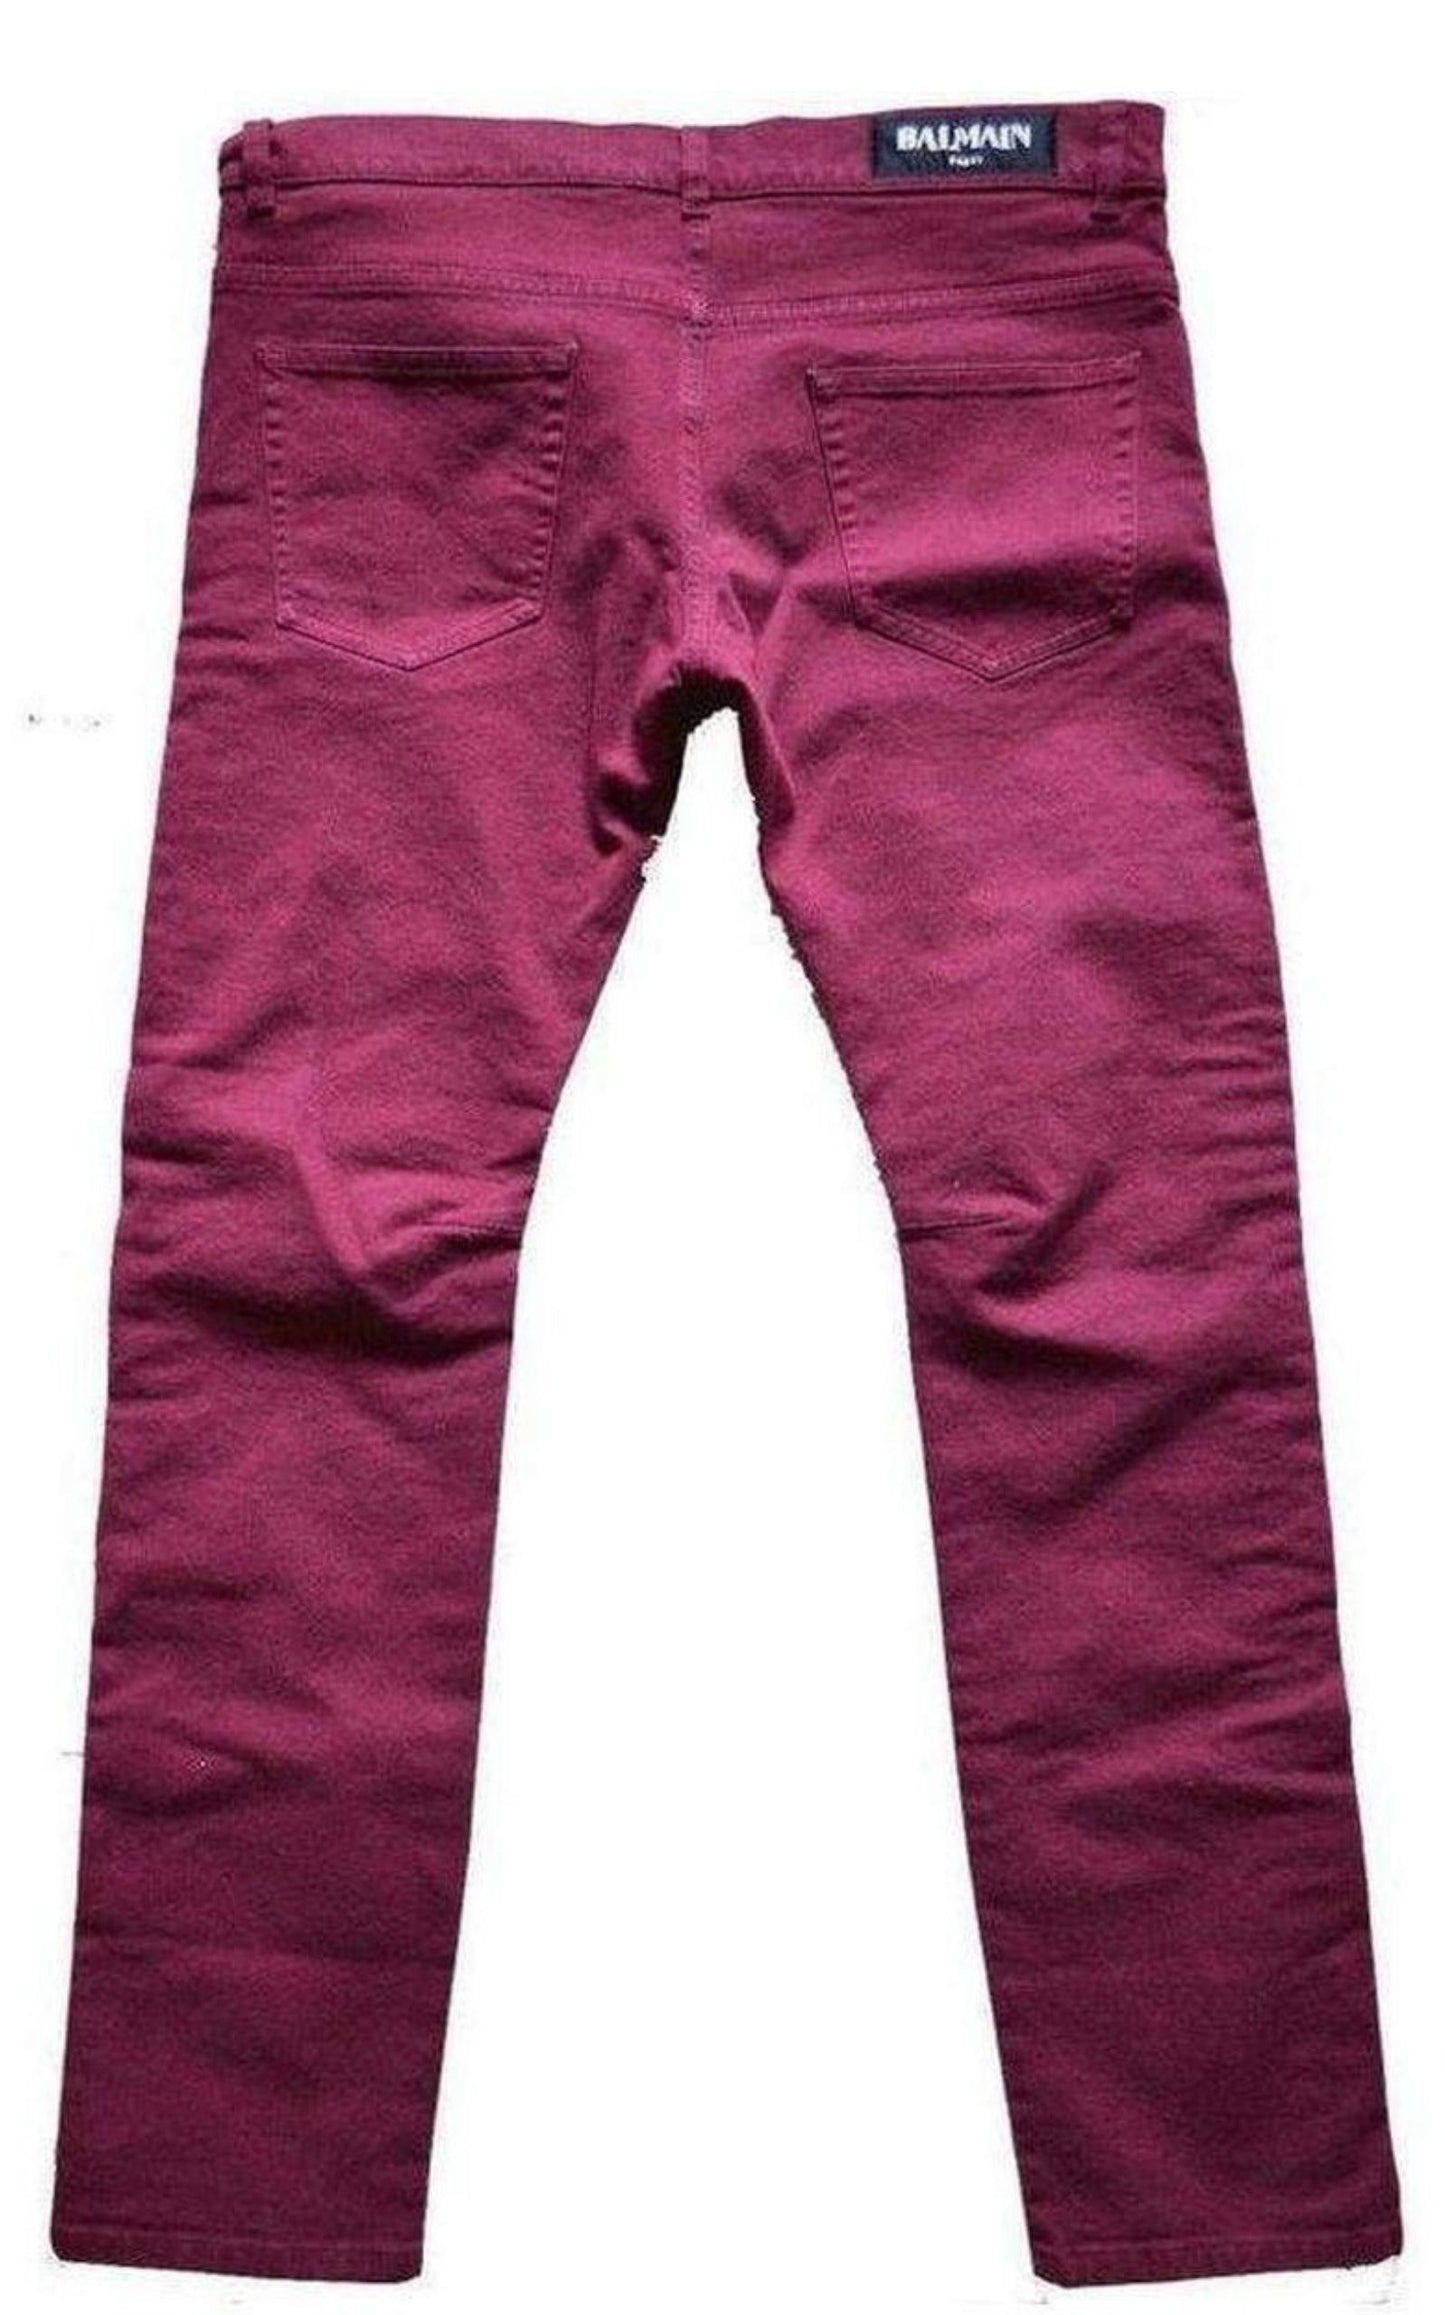  BalmainBurgundy Embroidered Trimming Slim Stretch Jeans - Runway Catalog